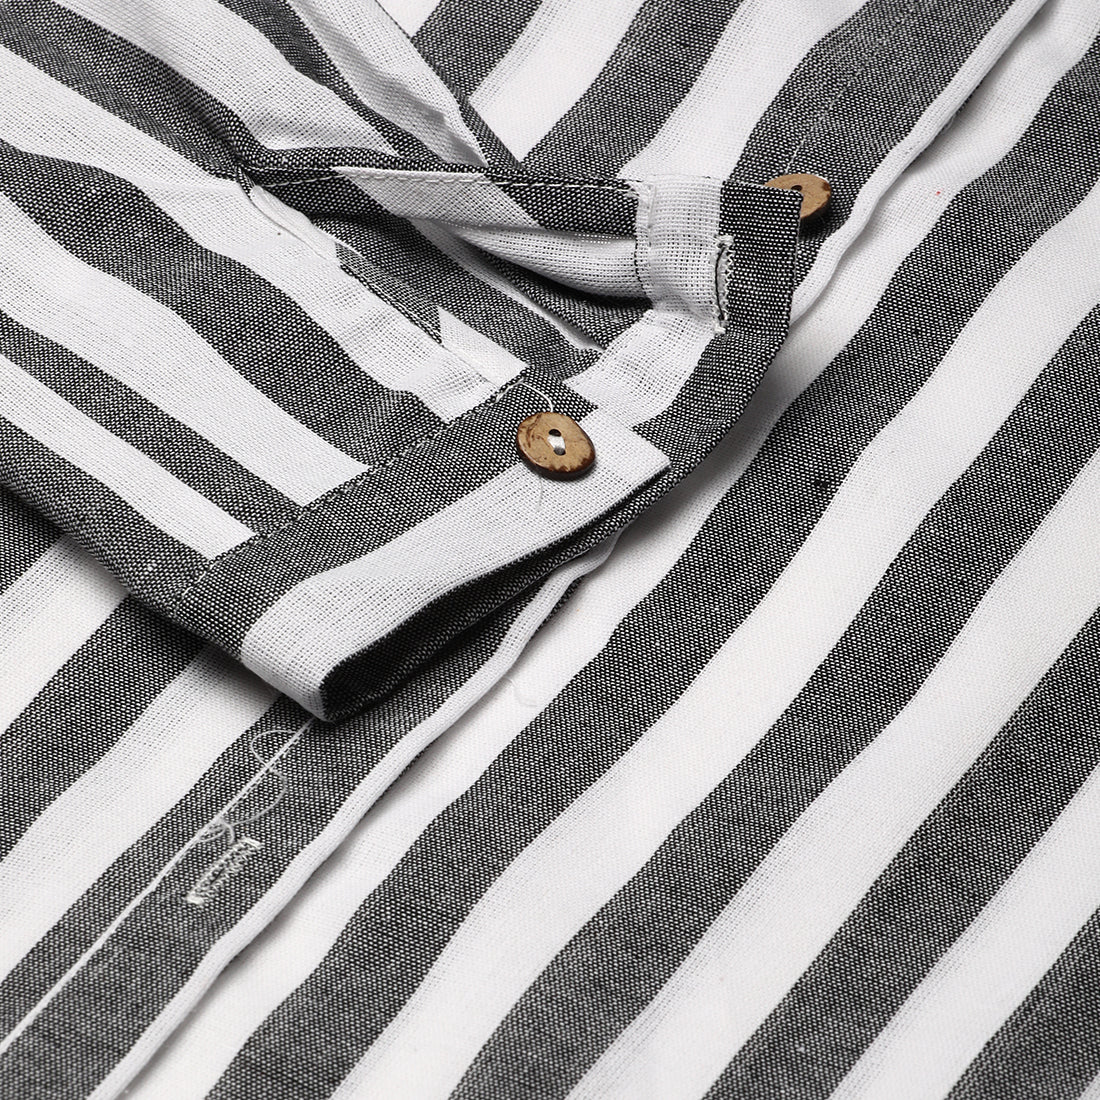 striped long sleeve shirt#color_black